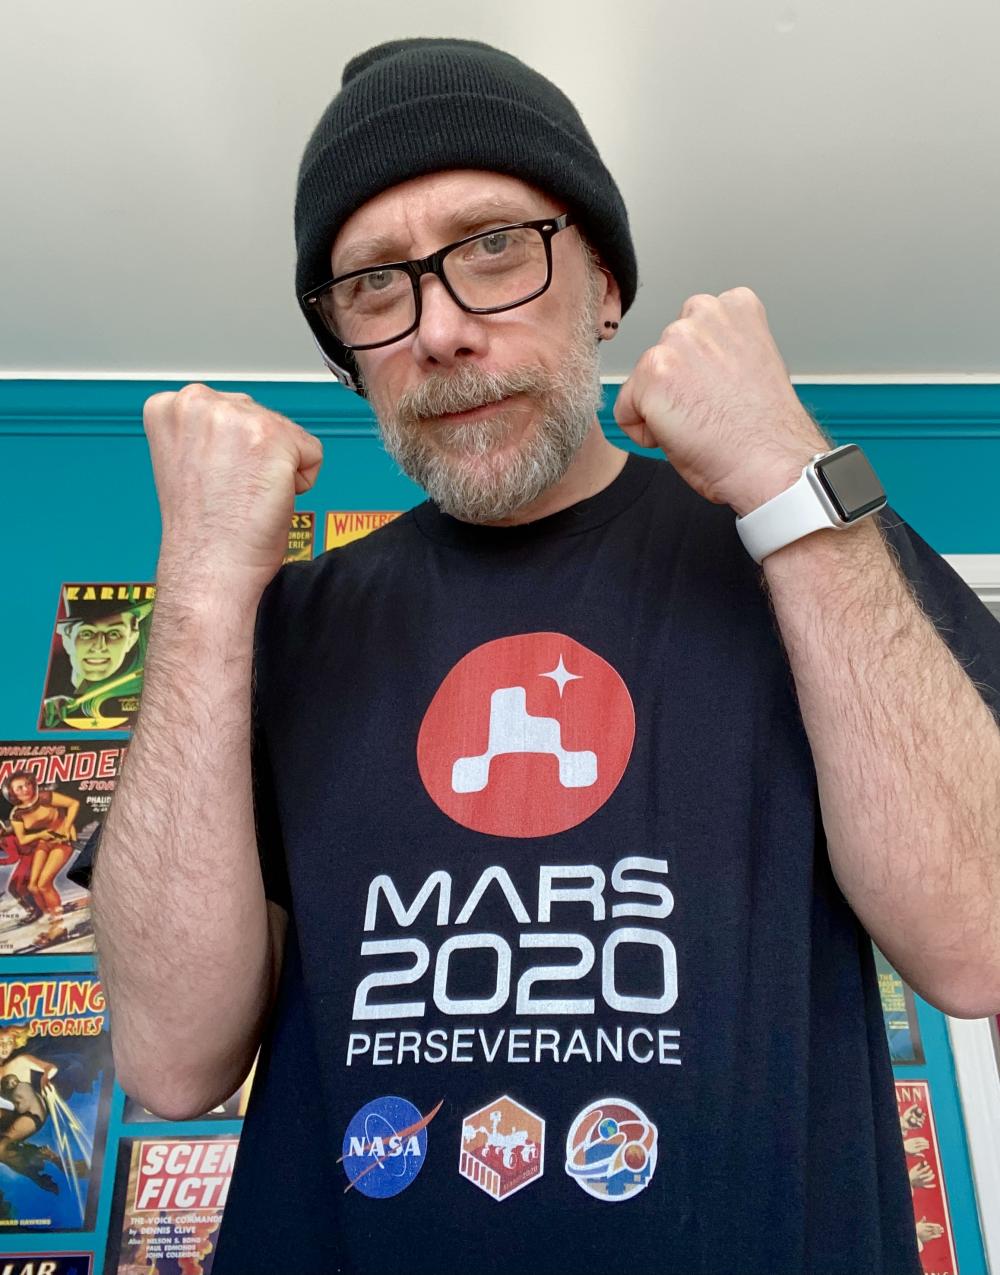 Mars 2020 Perserverance t shirt